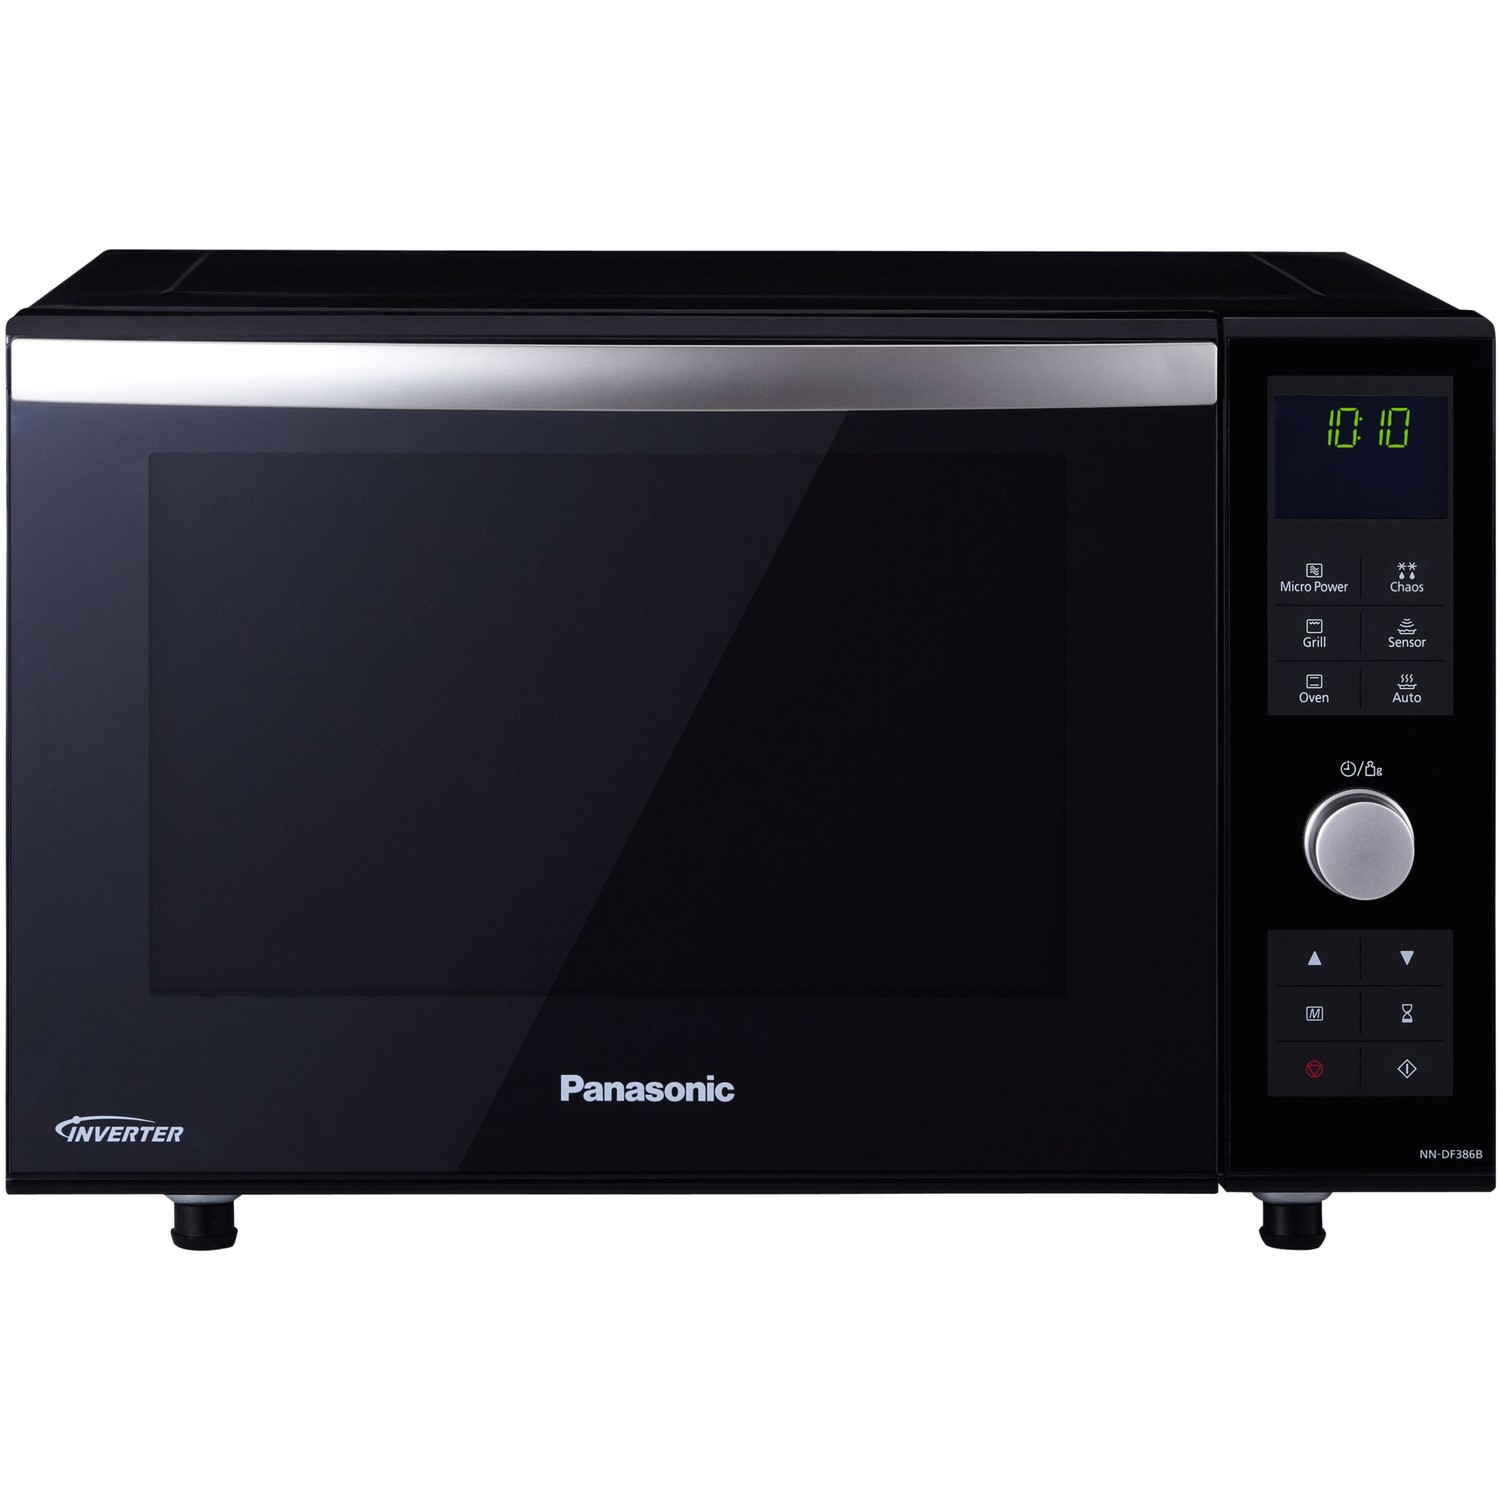 Panasonic NN-DF386BPQ 23 Litre Combination Microwave Oven - Black